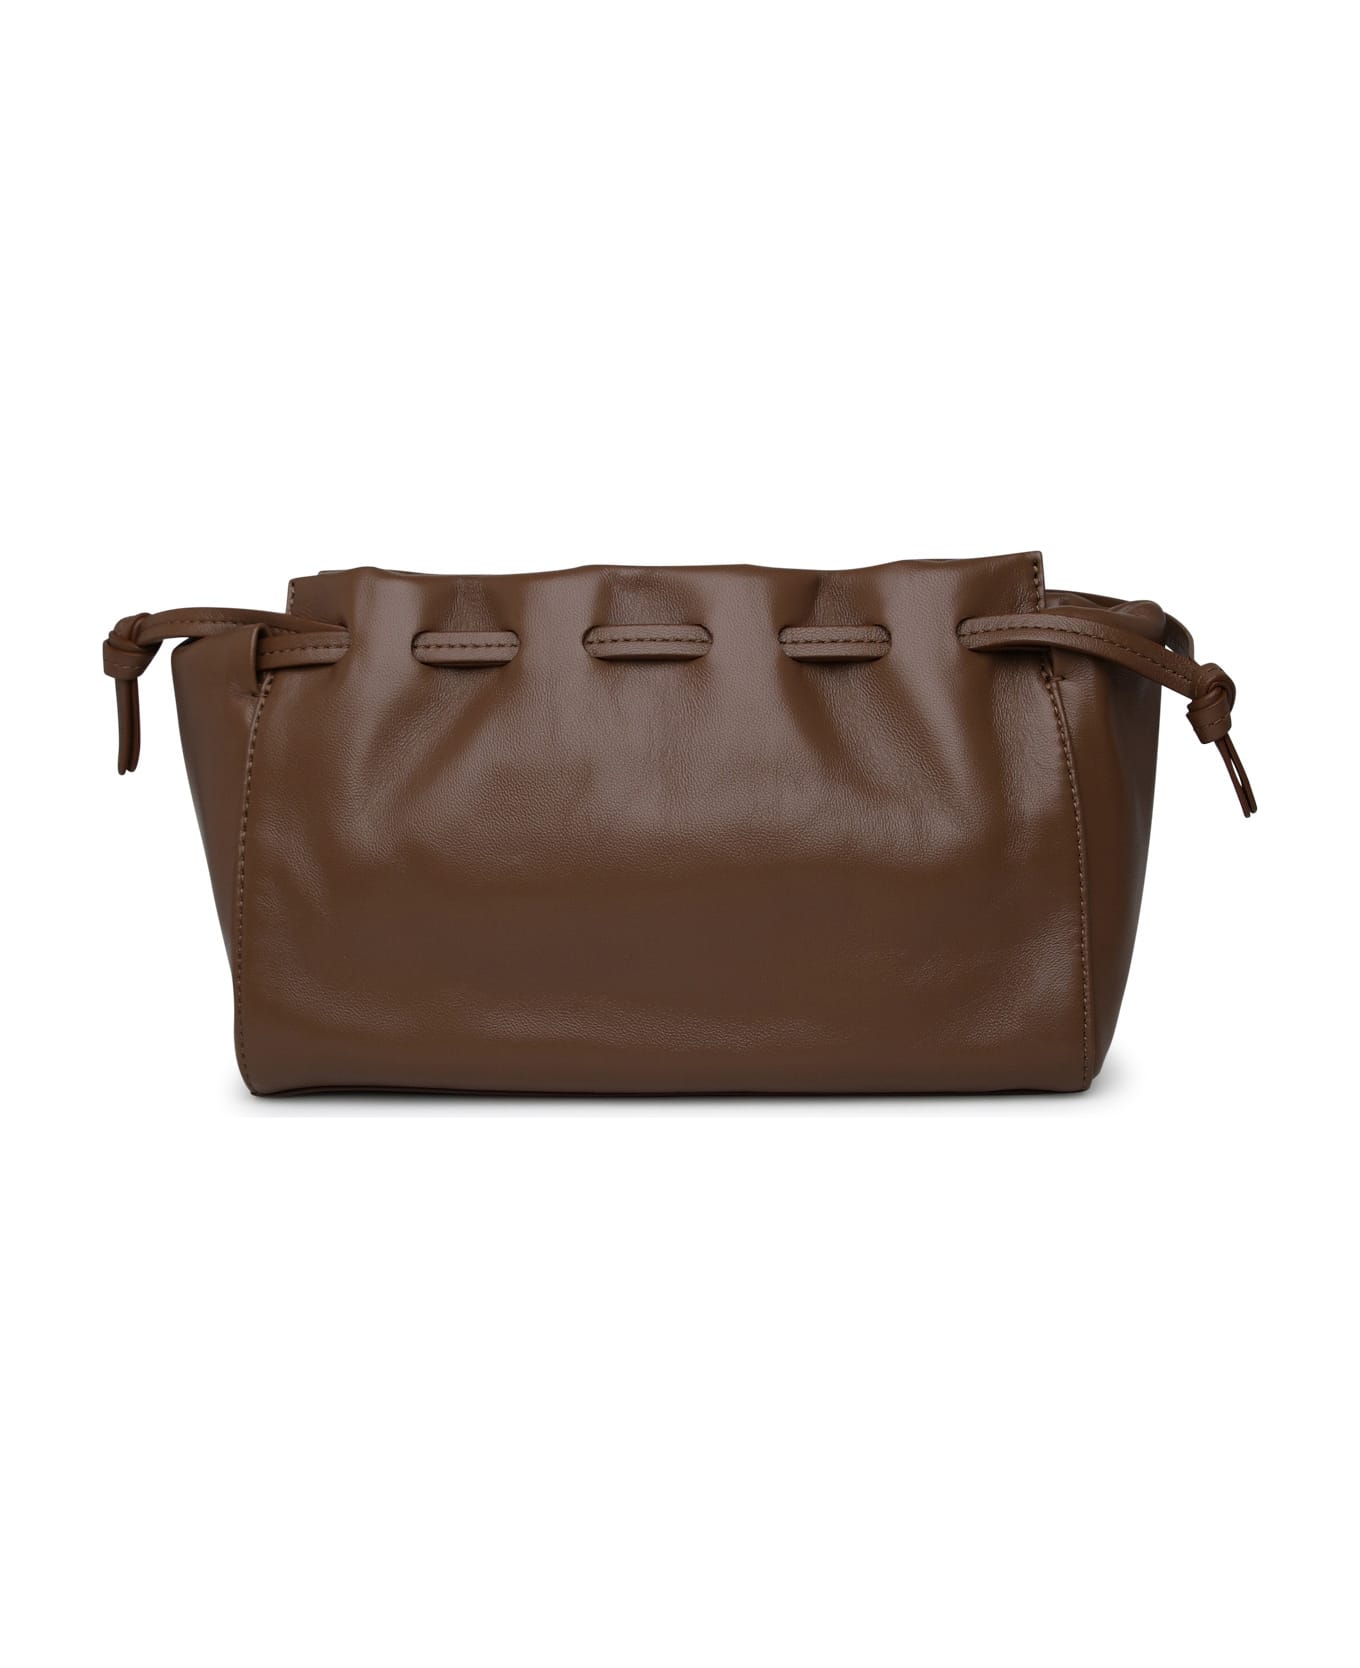 Mansur Gavriel 'bloom' Small Brown Leather Crossbody Bag - Brown クラッチバッグ